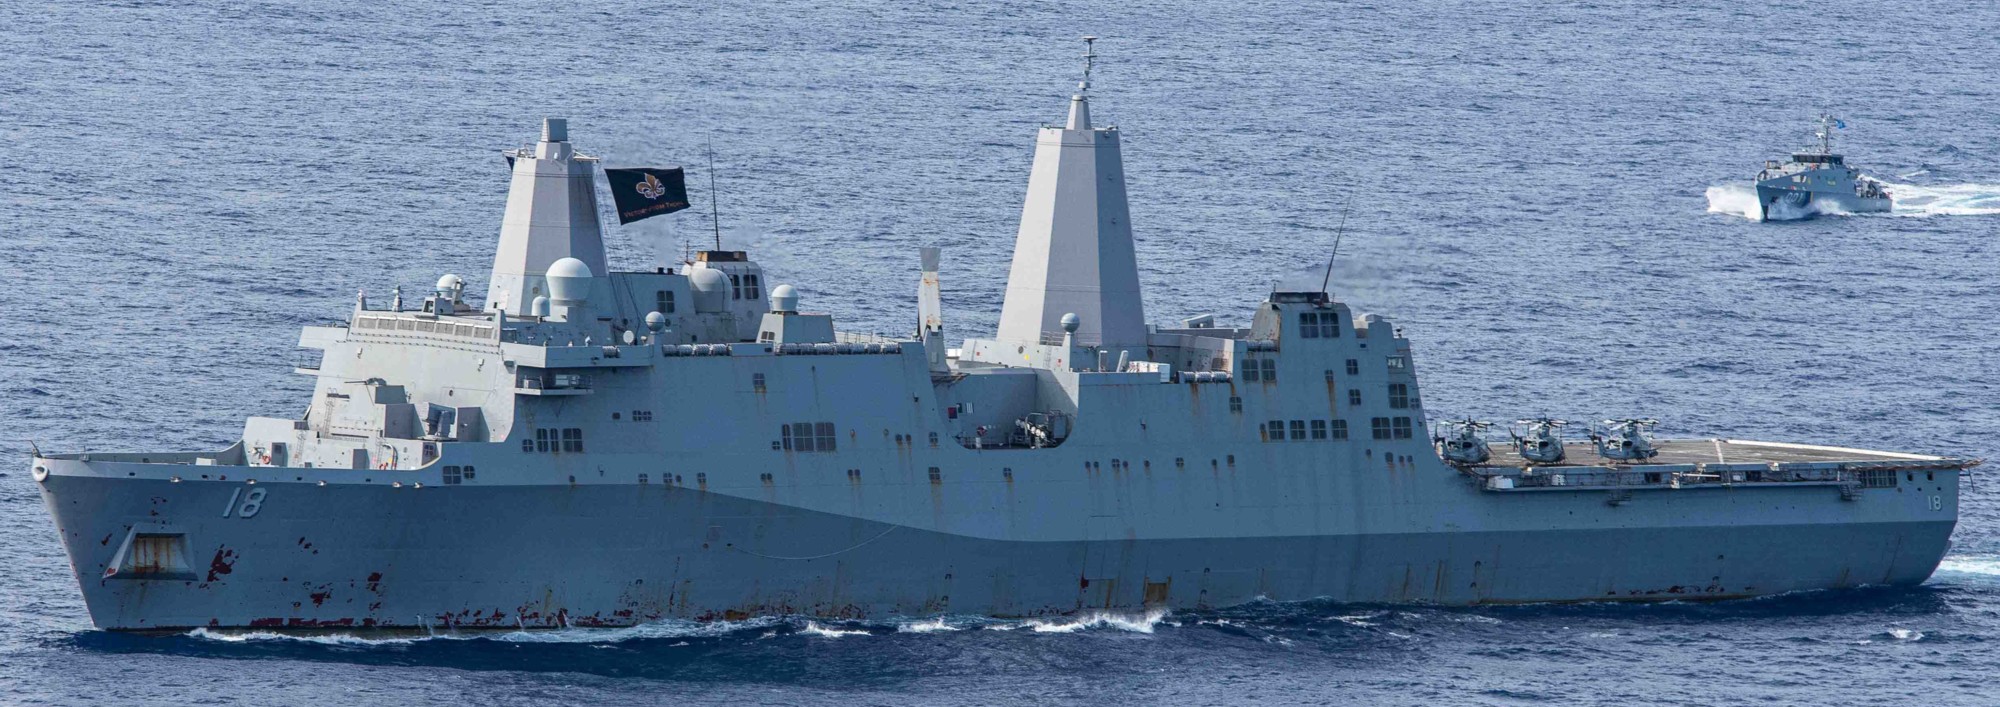 lpd-18 uss new orleans san antonio class amphibious transport dock landing ship us navy philippine sea 92